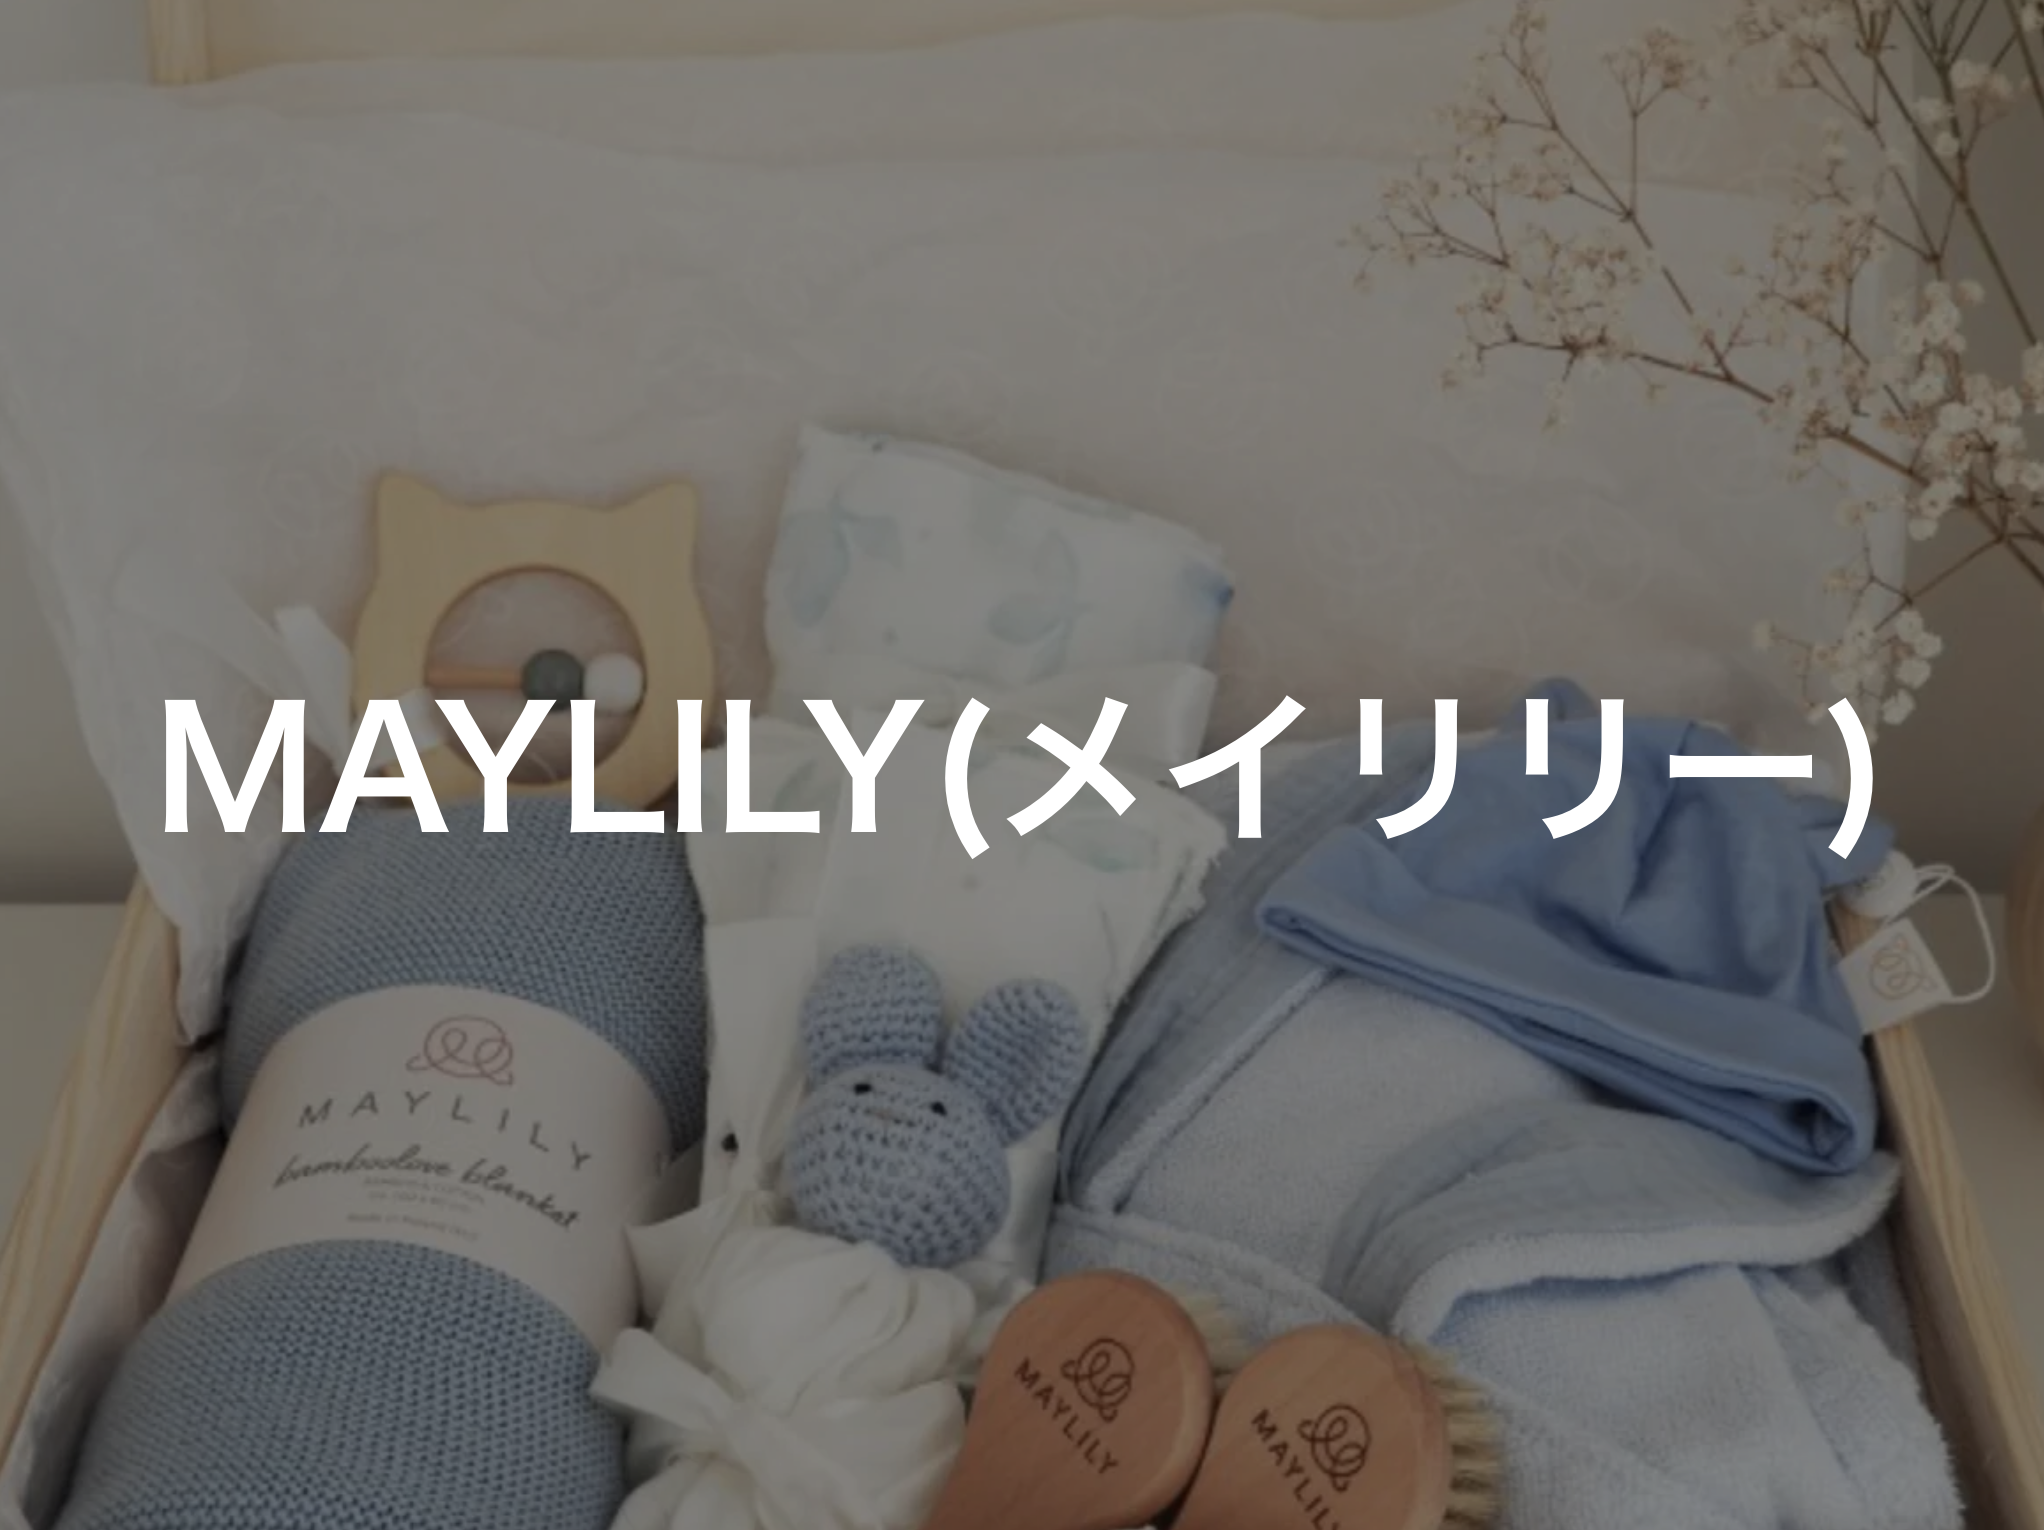 MAYLILY JAPAN(メイリリージャパン)口コミと評判・レビュー!ポーランド発の人気ブランド